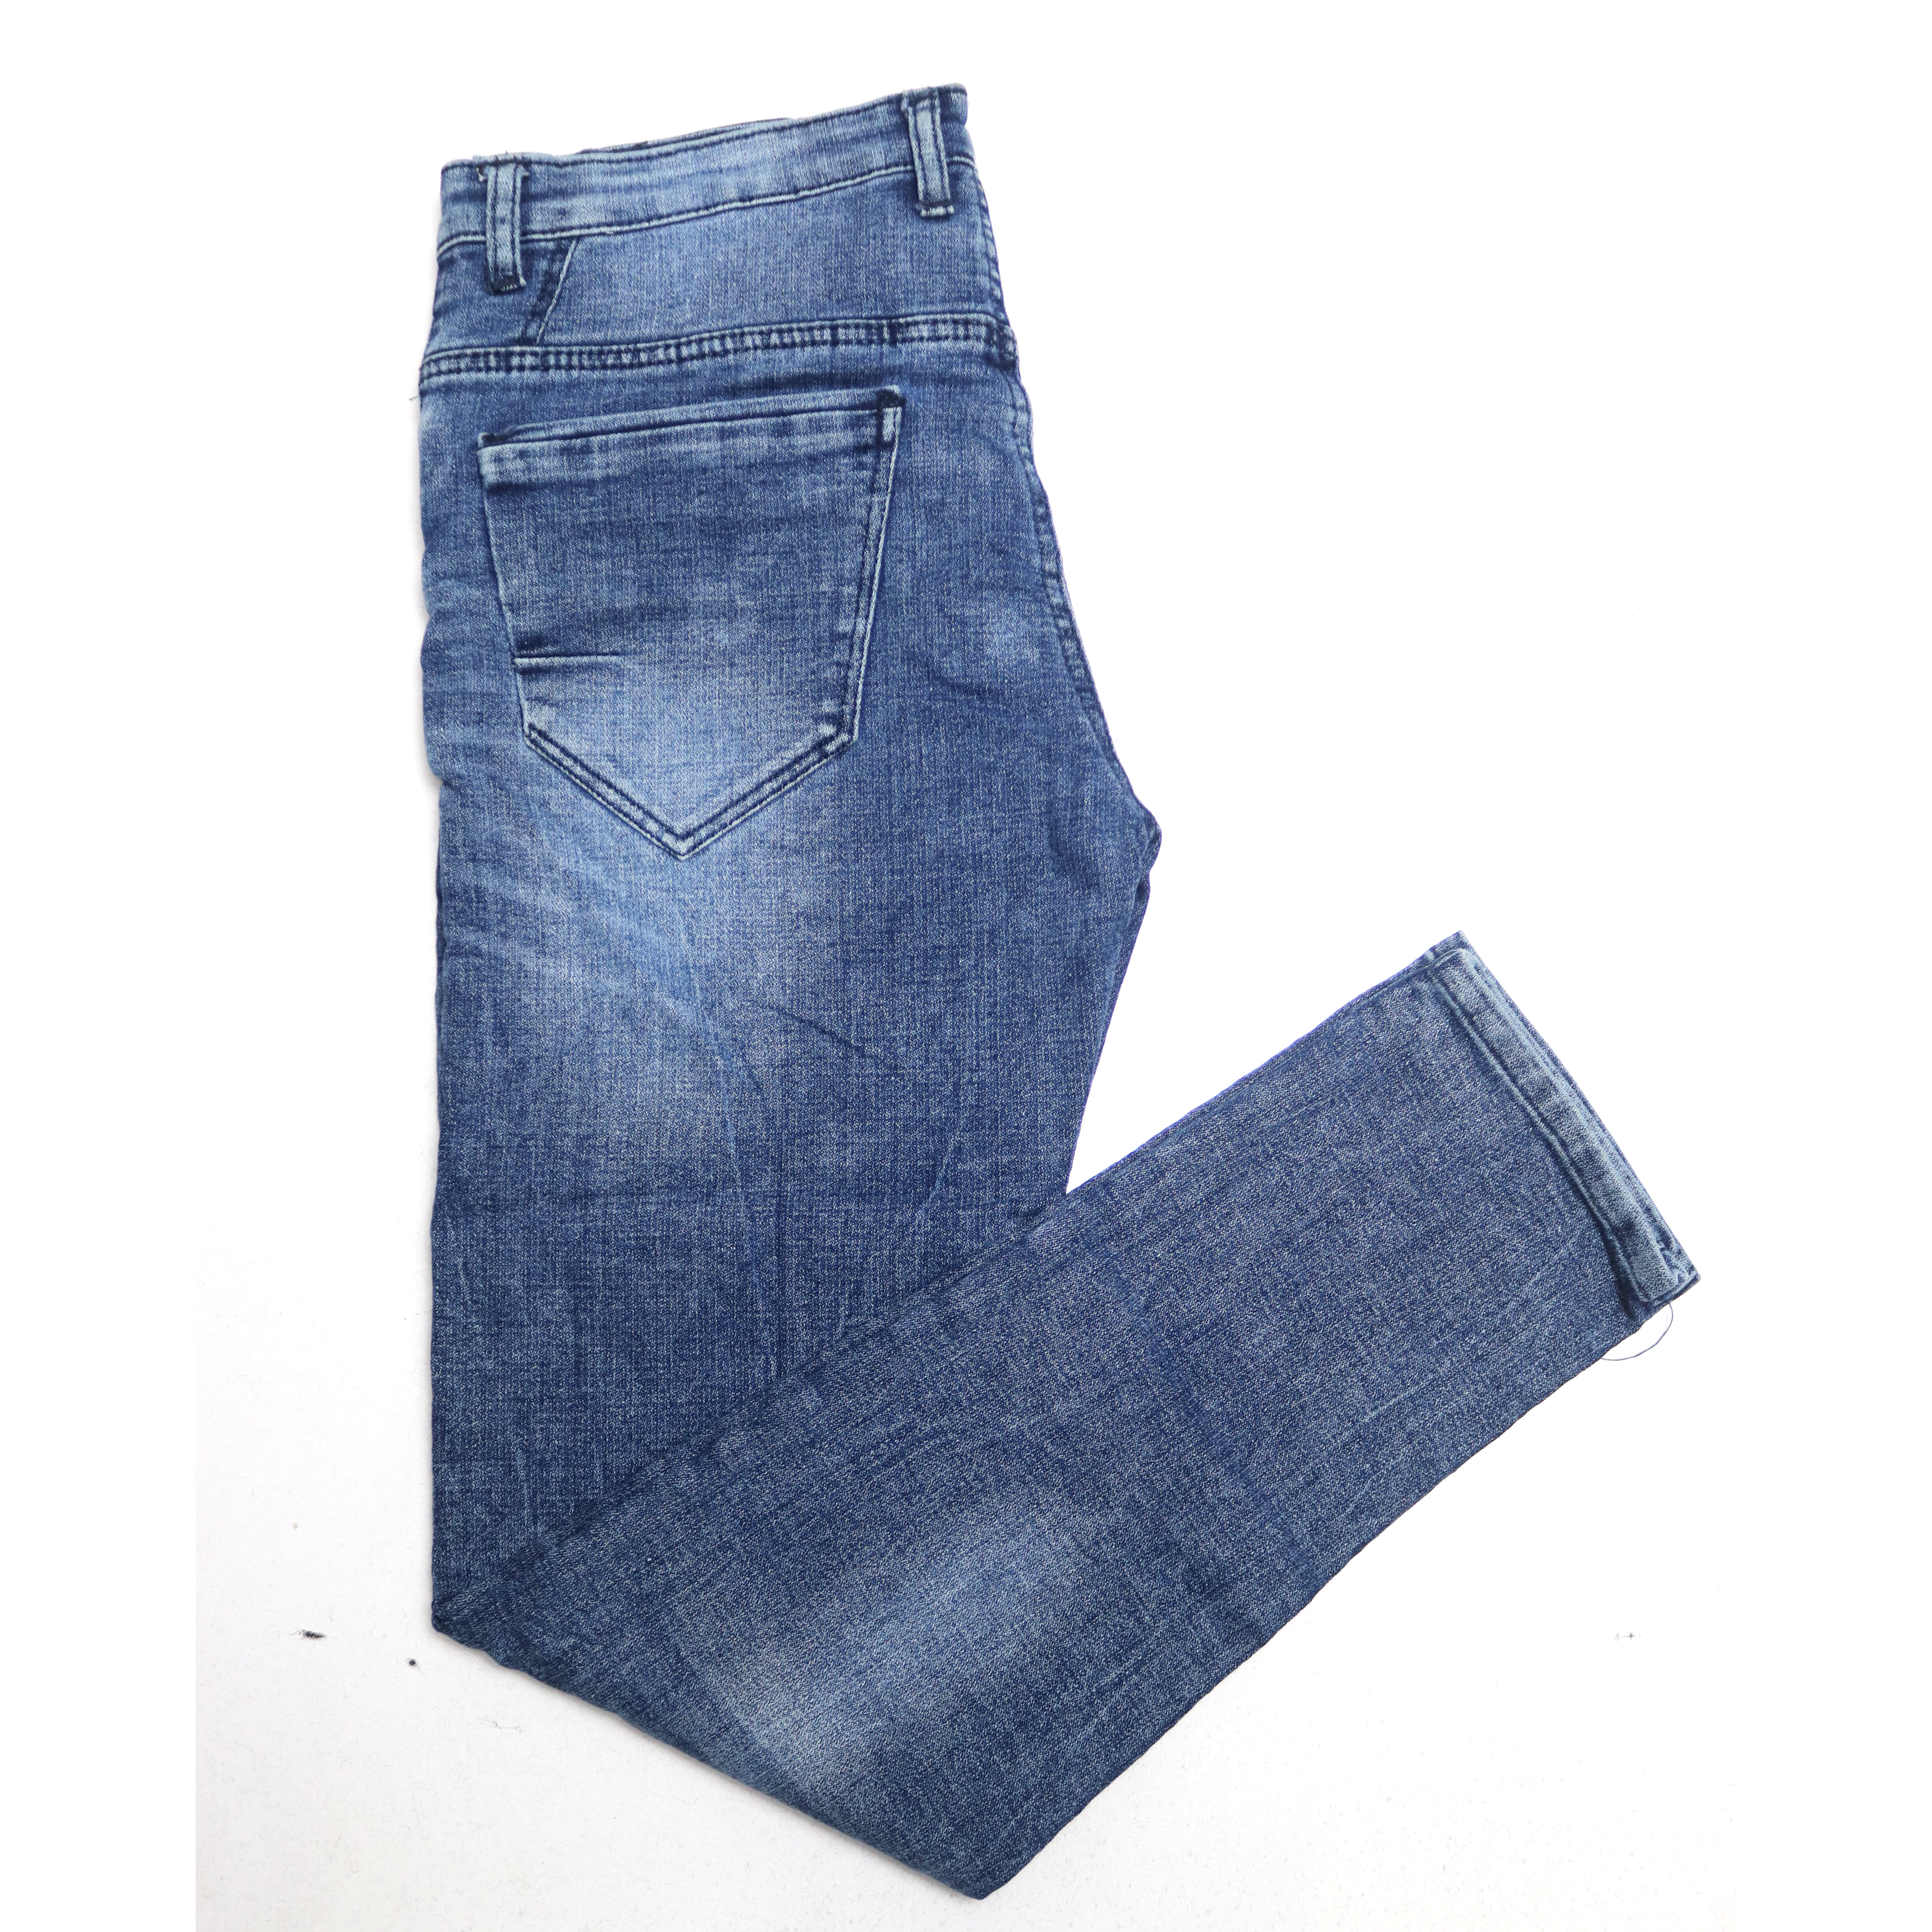 Super Soft Washed Stylish Jeans for Men